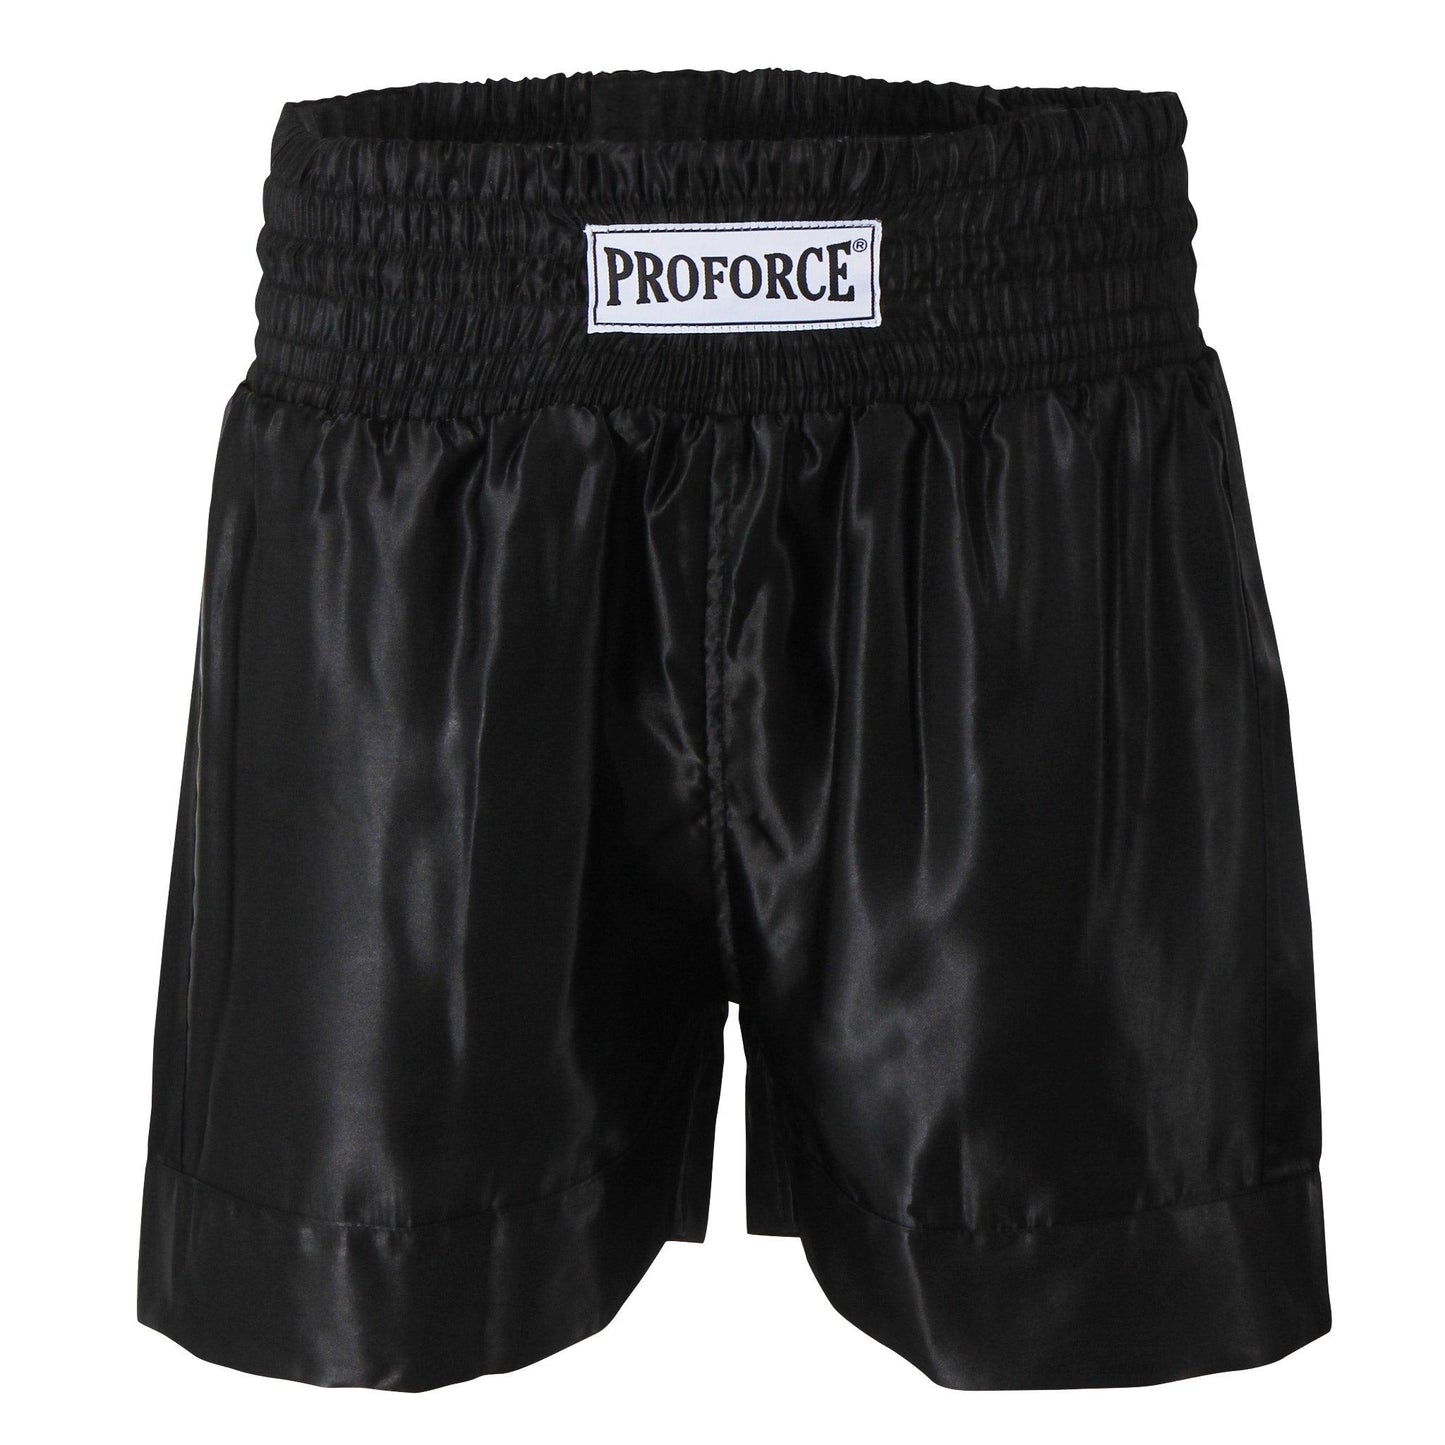 ProForce Muay Thai Shorts - Violent Art Shop